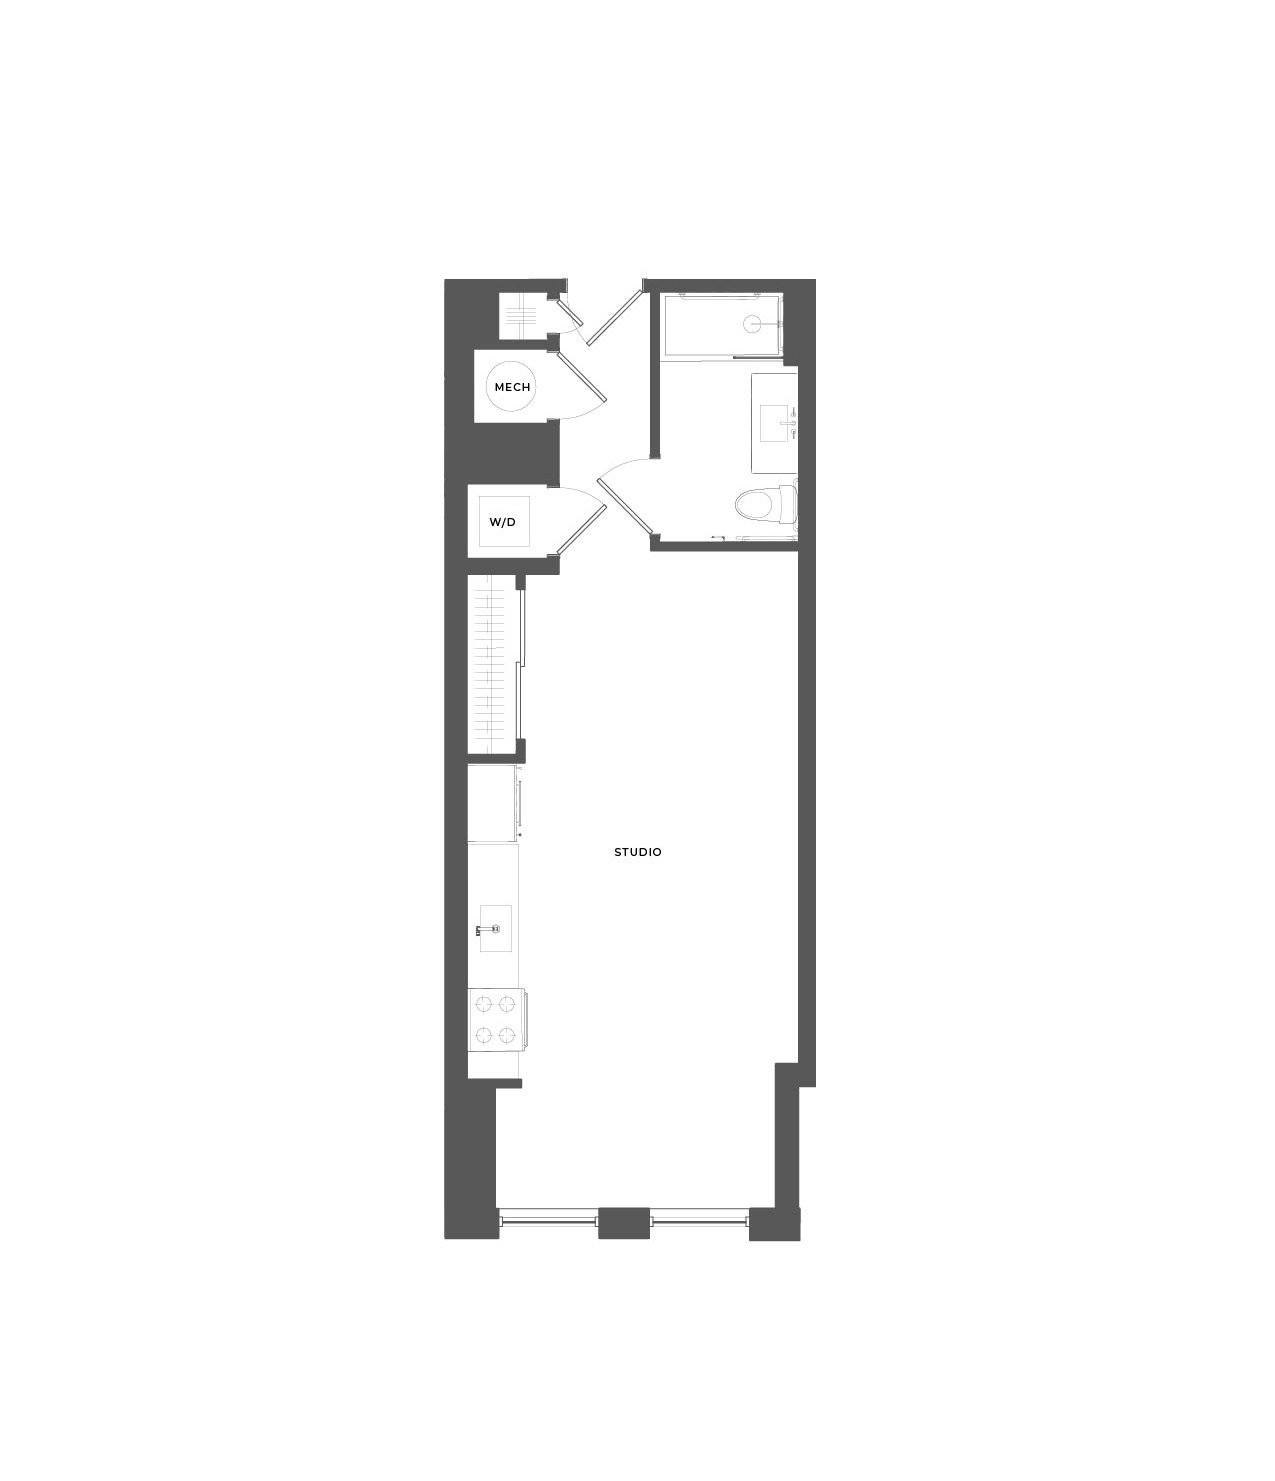 Floorplan of 1105